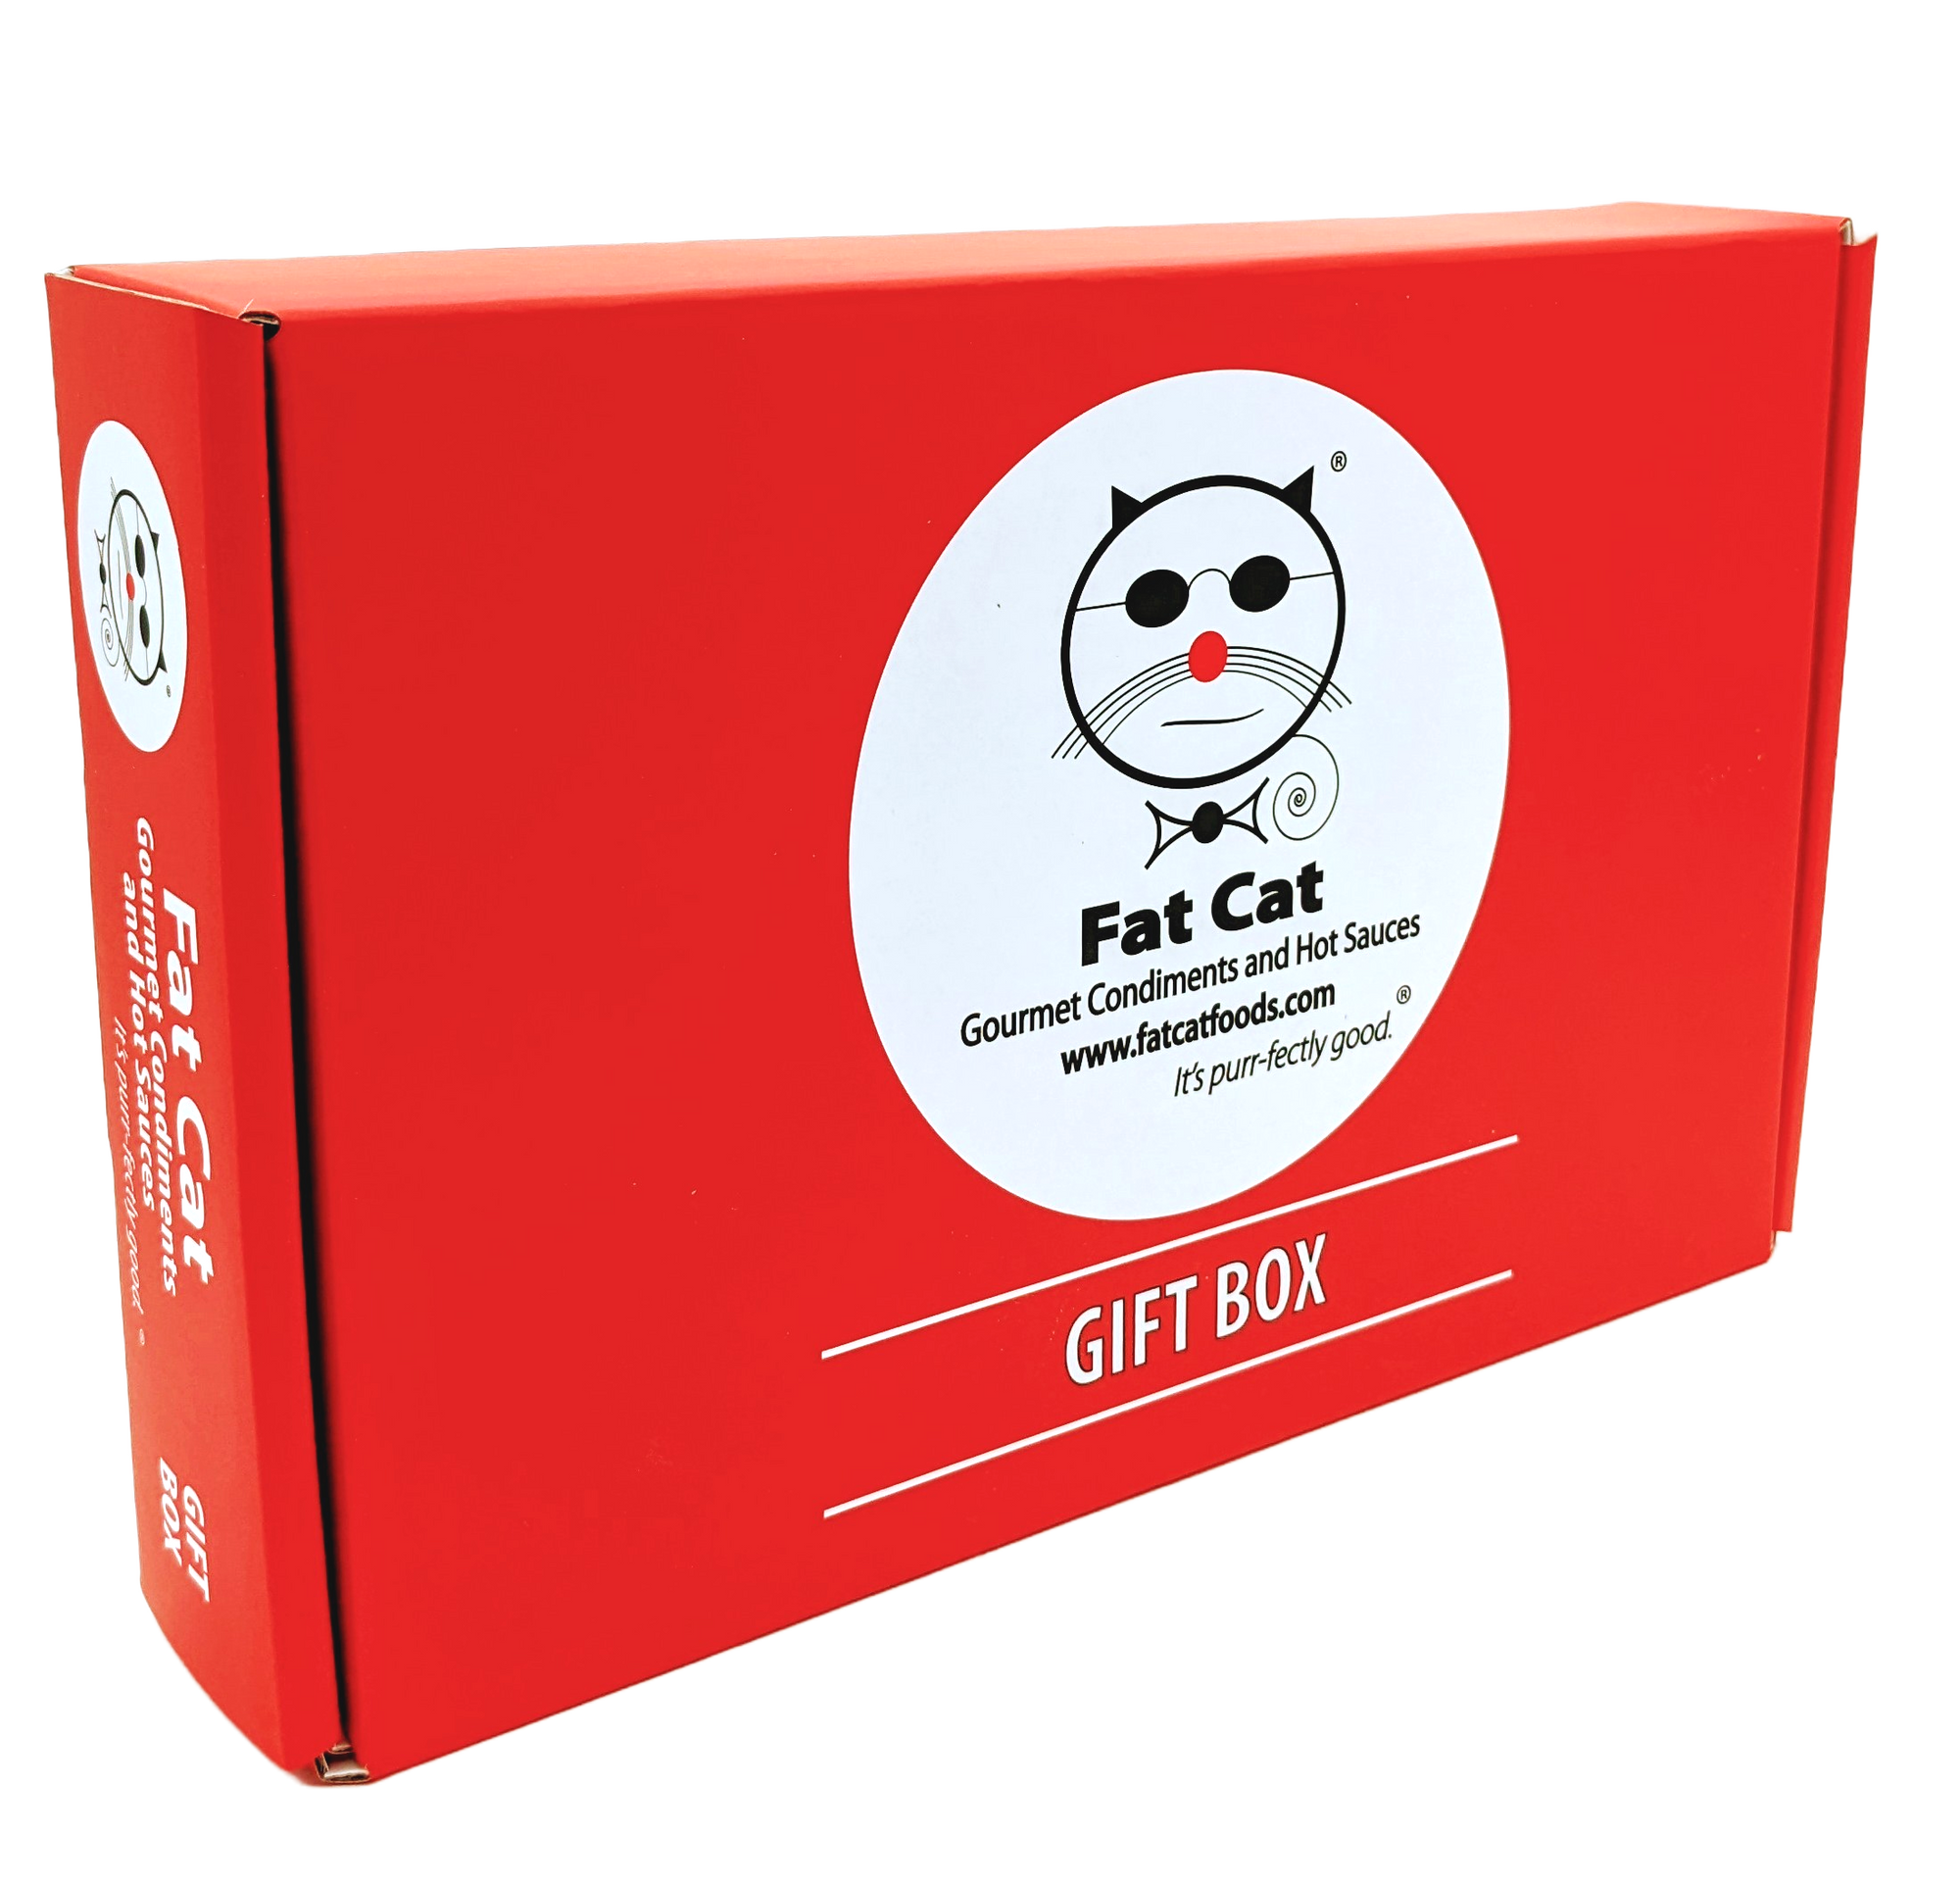 Mild Heat Four Bottle Hot Sauce Gift Box - Fat Cat Gourmet Hot Sauce & Specialty Condiments